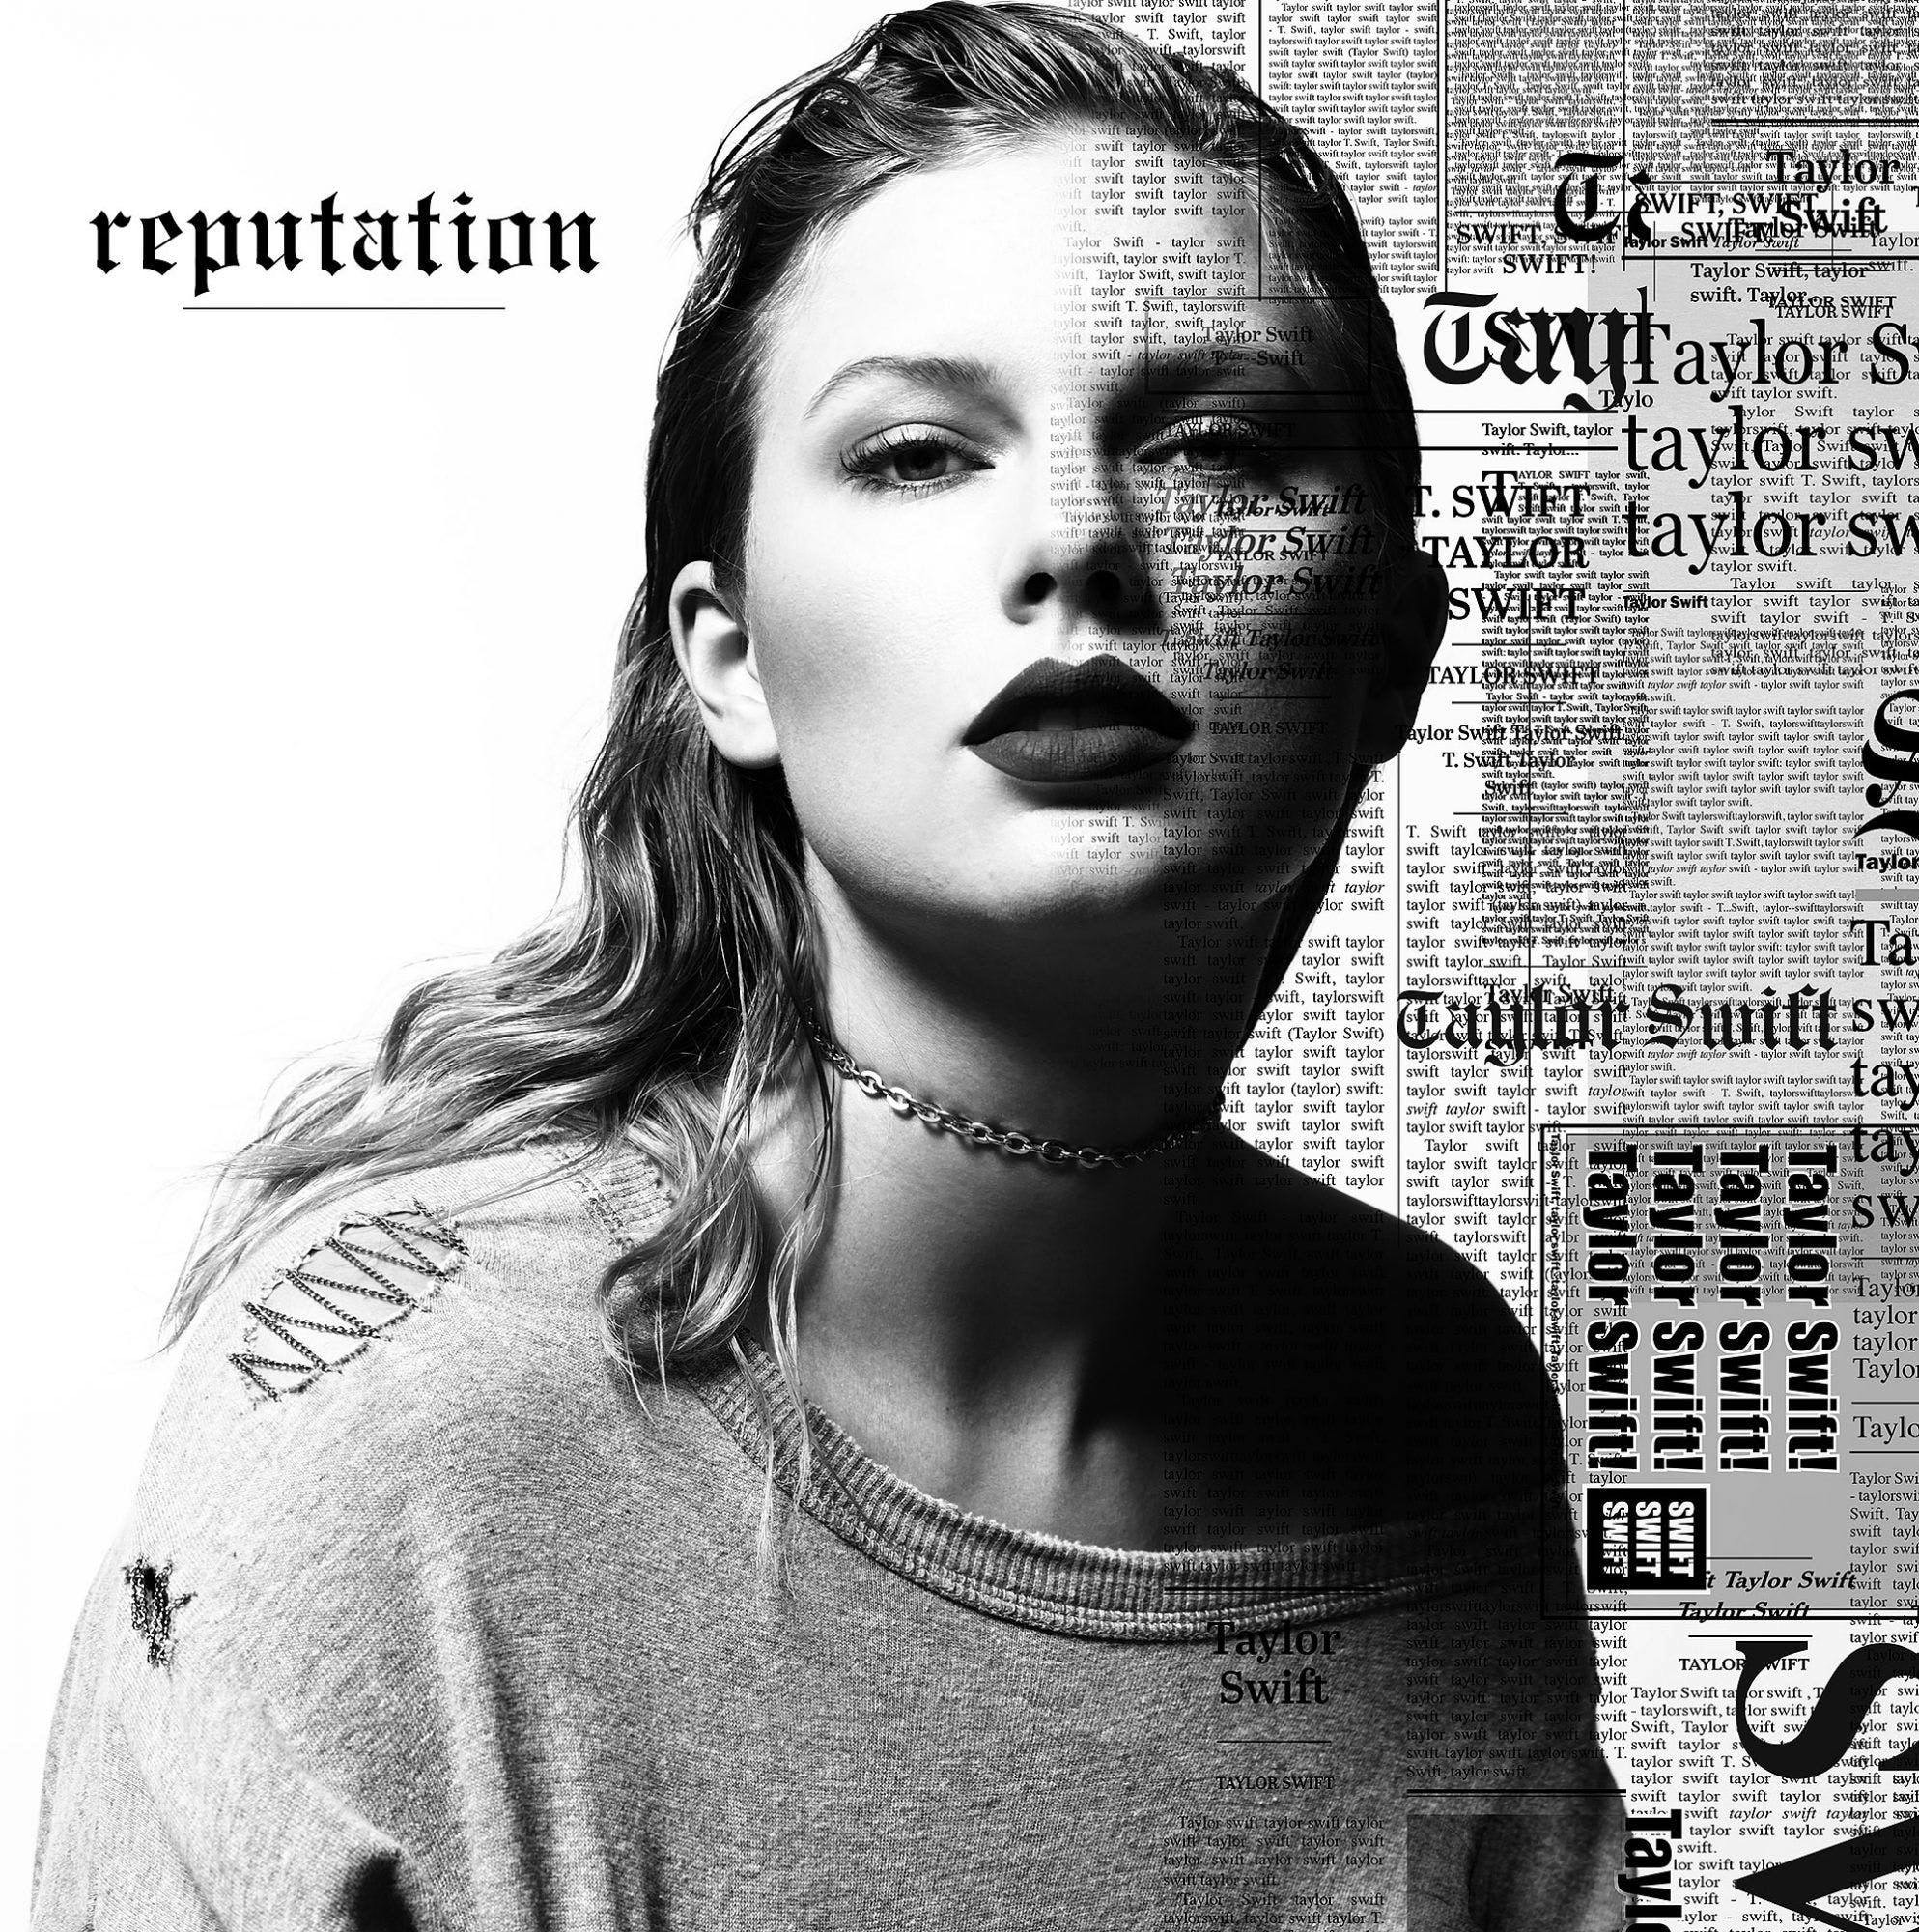 Taylor Swift's reputation album cover